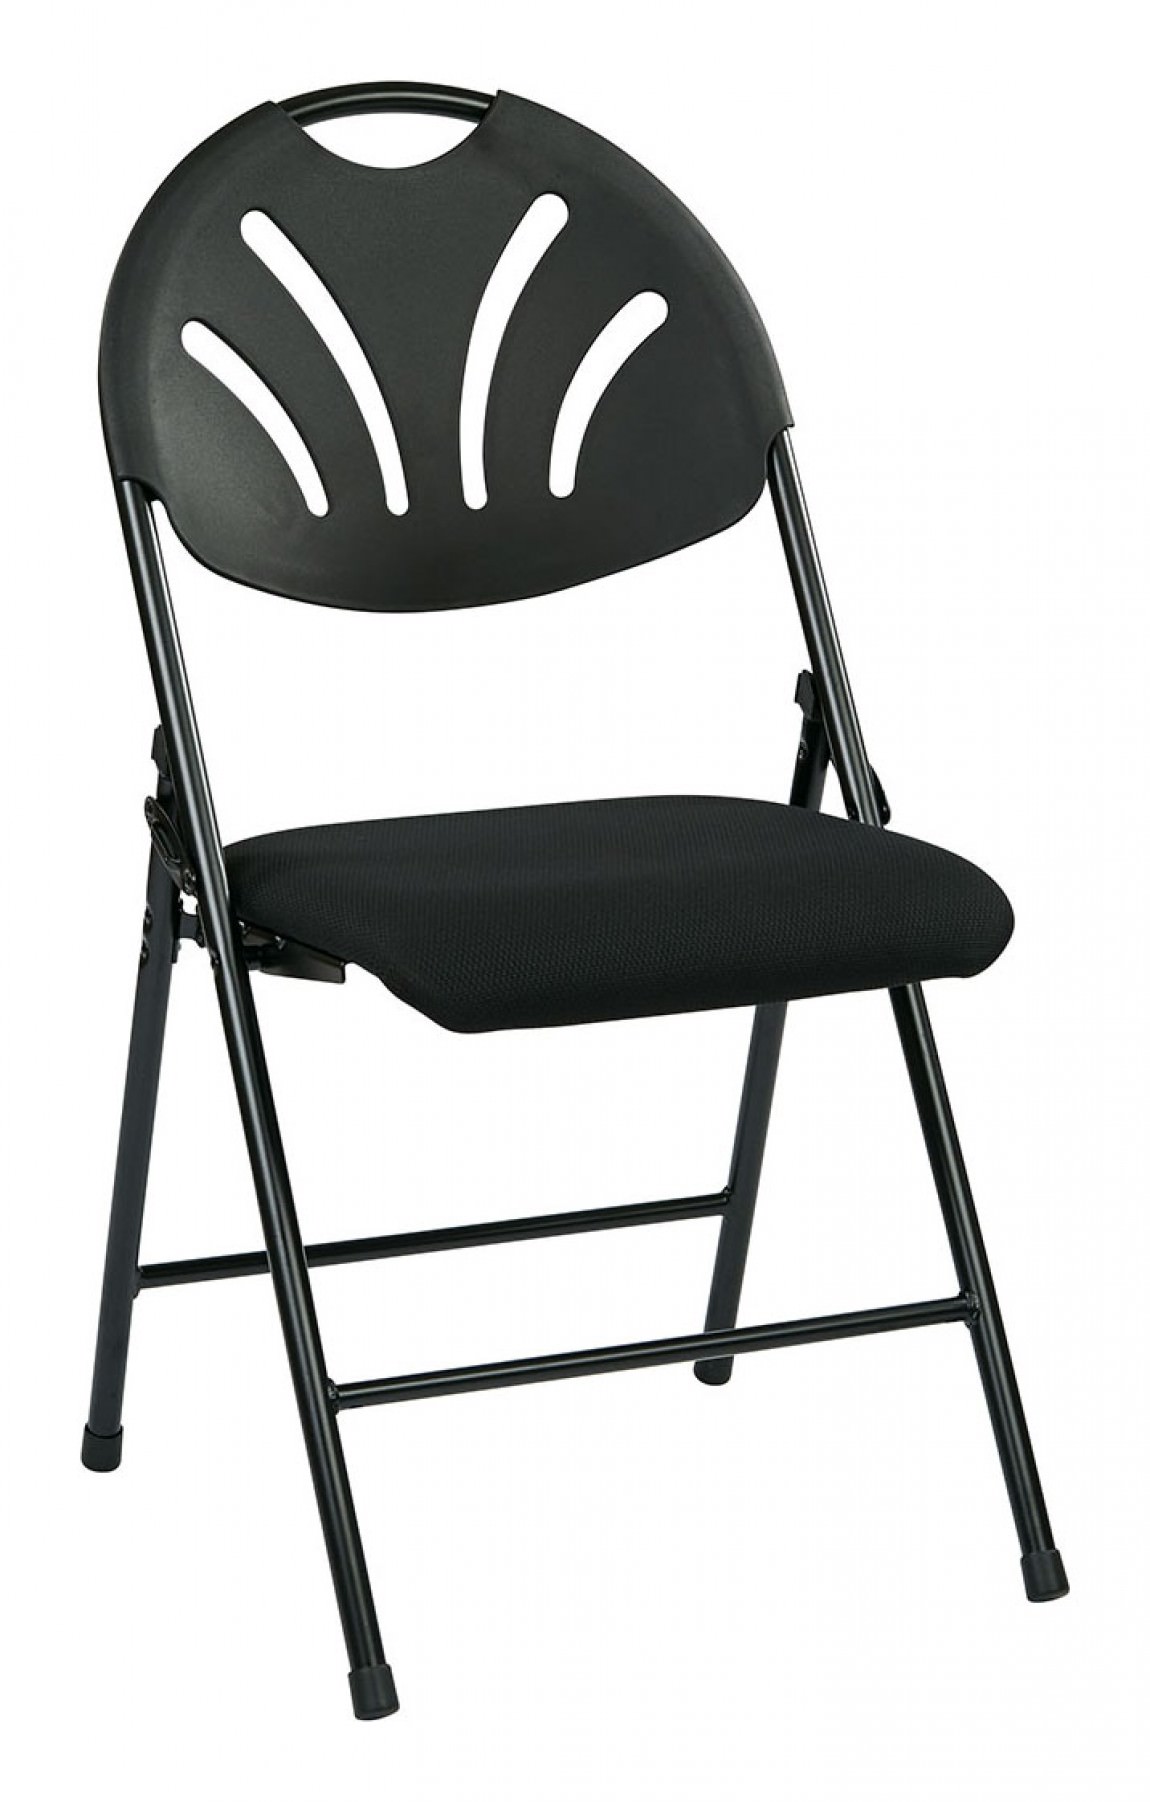 Black Folding Cushion Chair - 4 Pack 19.25 x 21.5 x 35.5